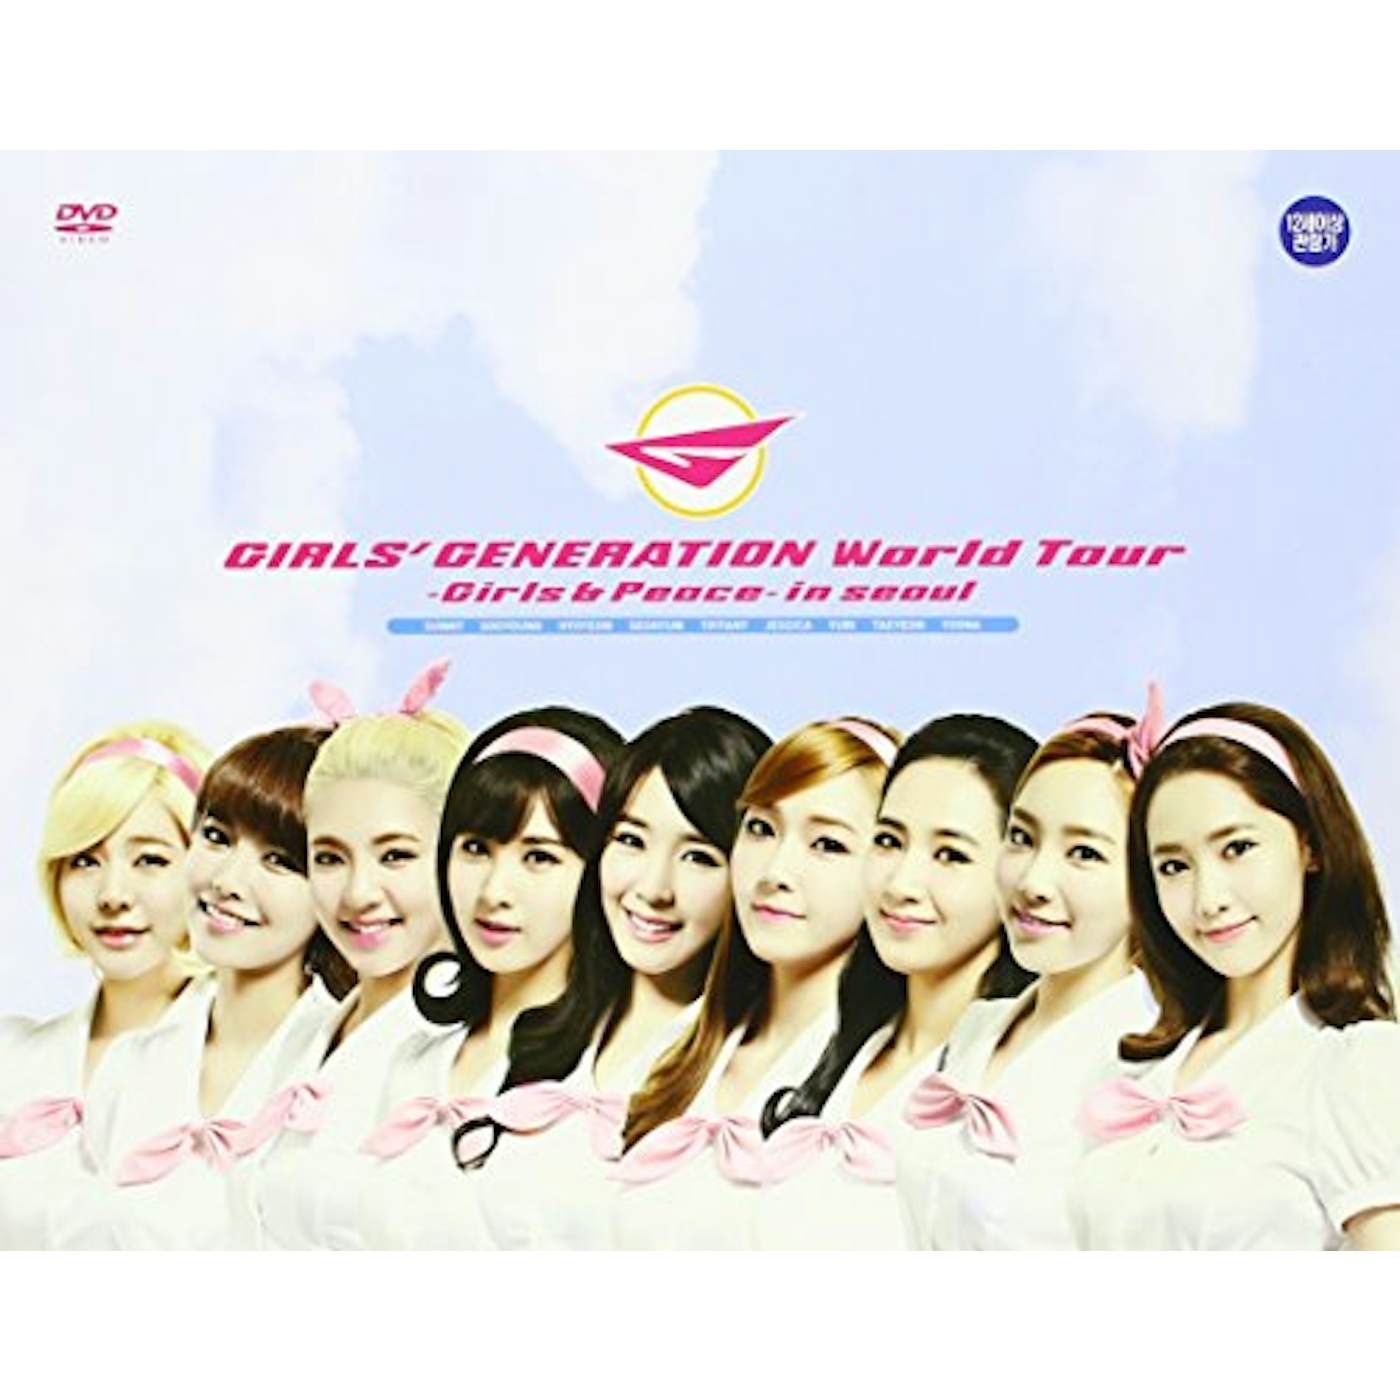 Girls' Generation WORLD TOUR [GIRLS & PEACE IN SEOUL] DVD